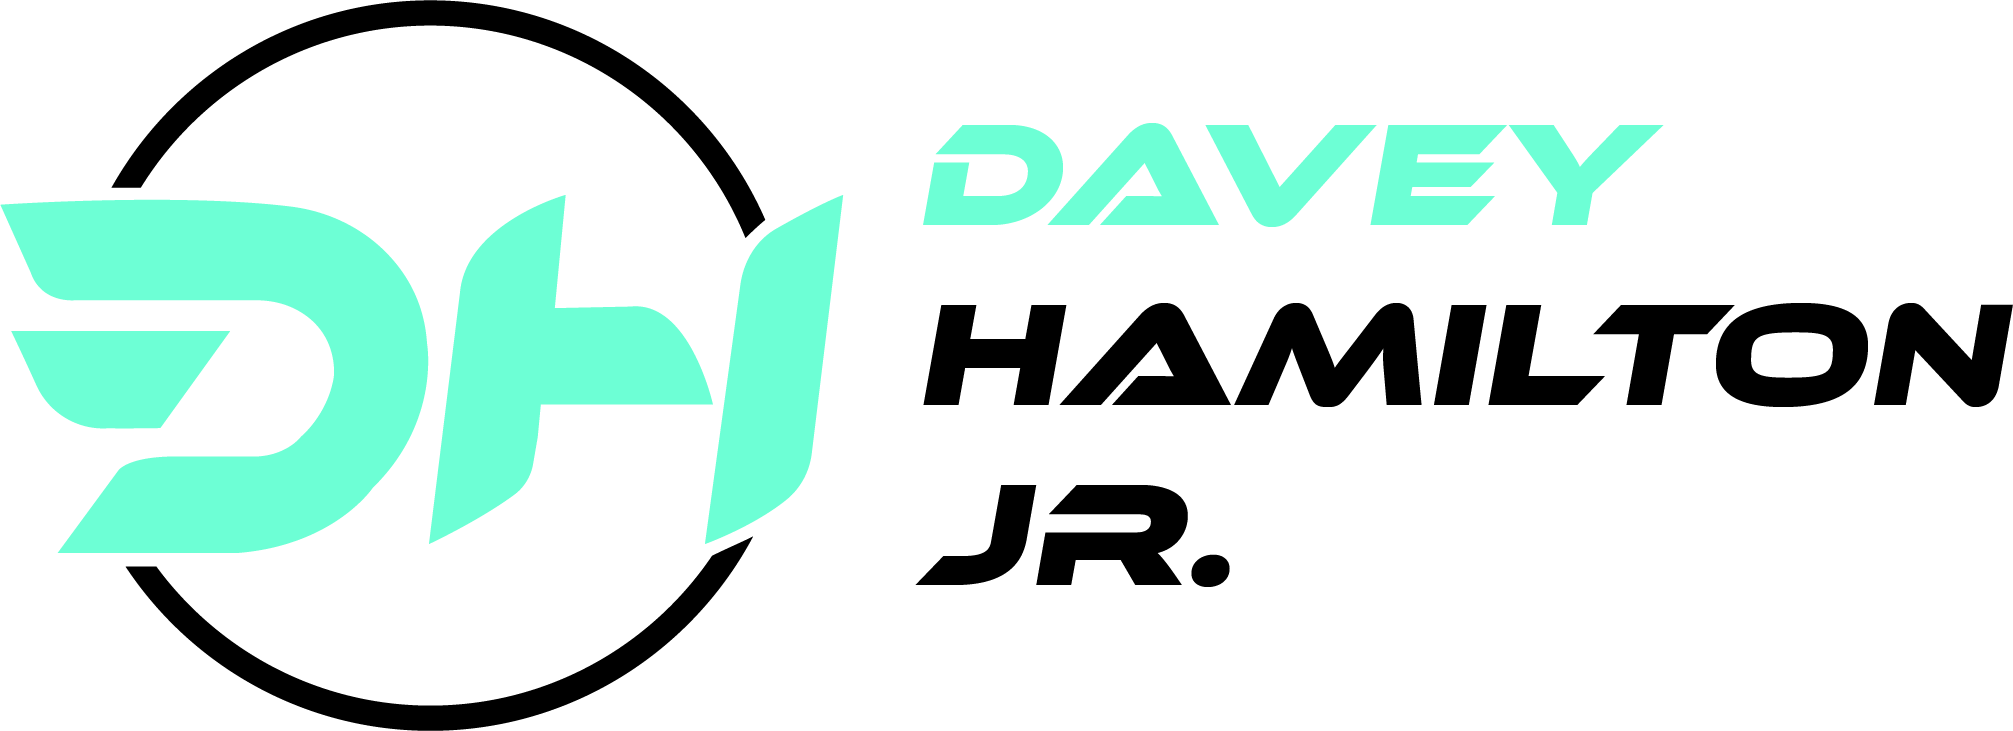 Davey Hamilton Jr.